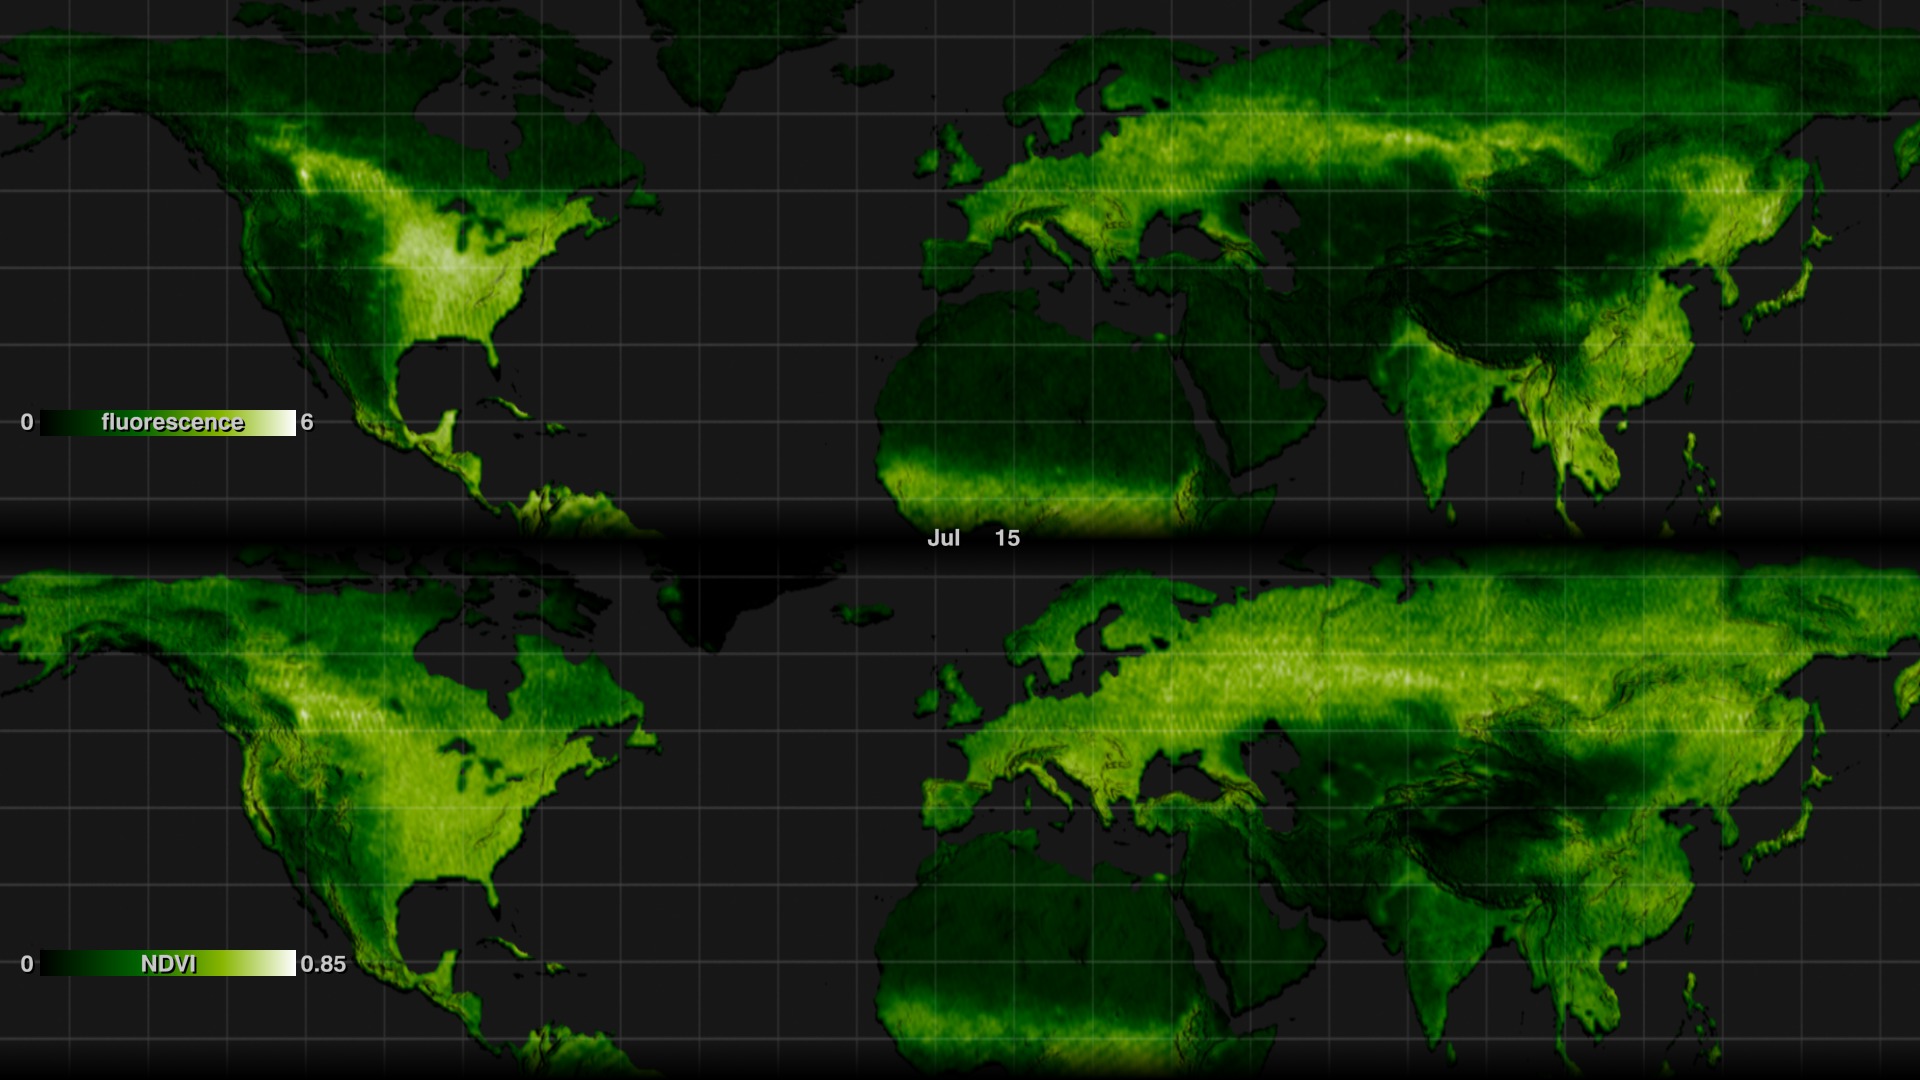 Comparison of fluorescence data (top) to NDVI data (bottom)